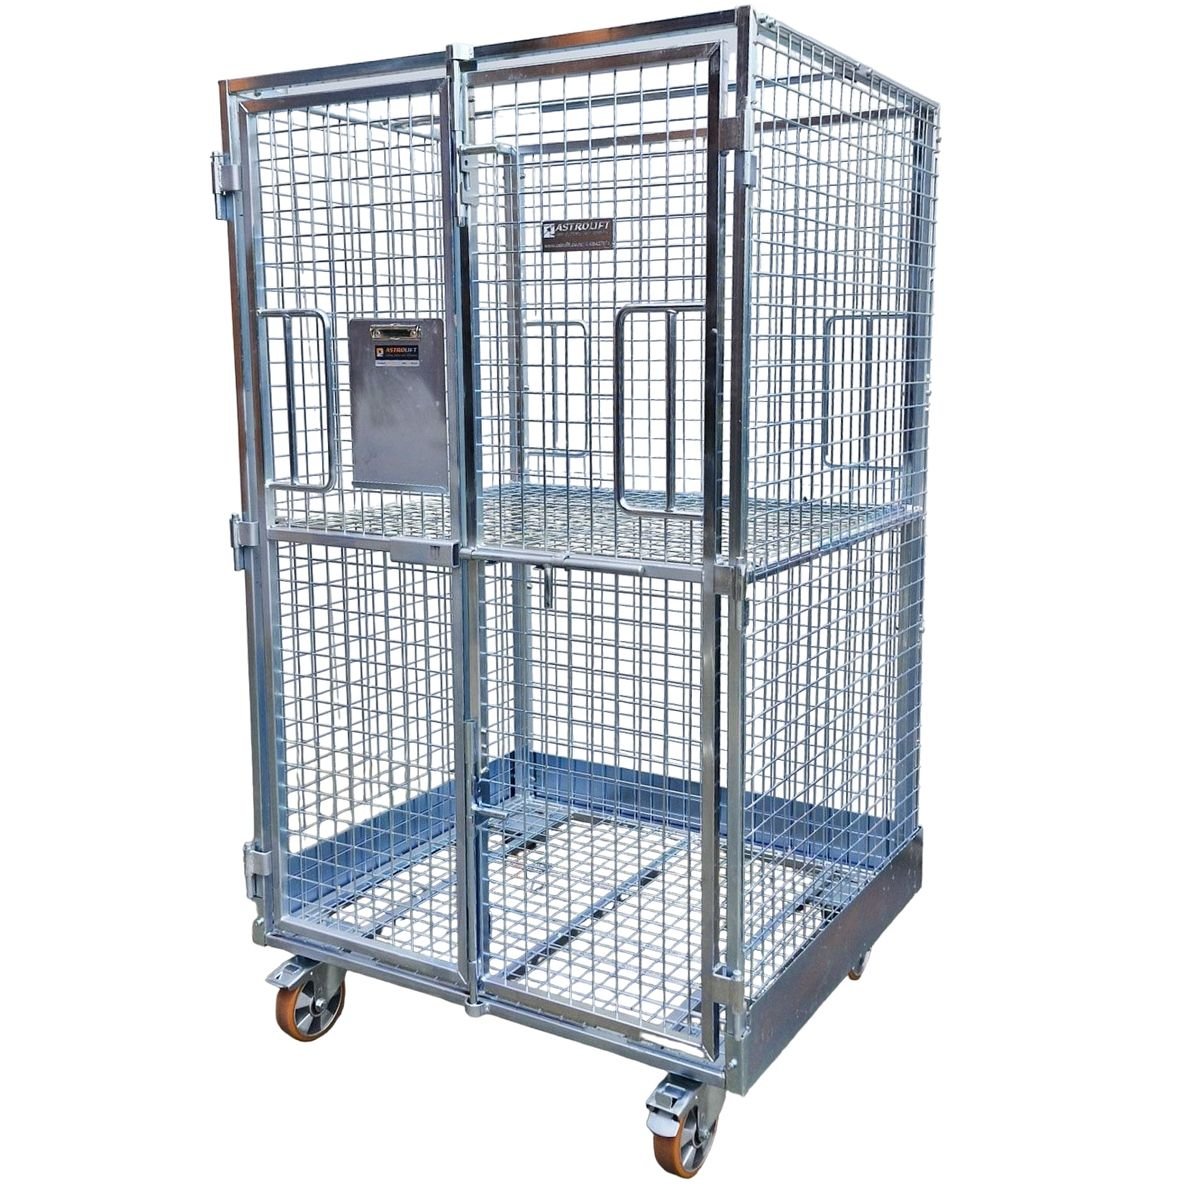 Buy Cage Trolley (Dual-door - Zinc) in Cage Trolleys from Astrolift NZ